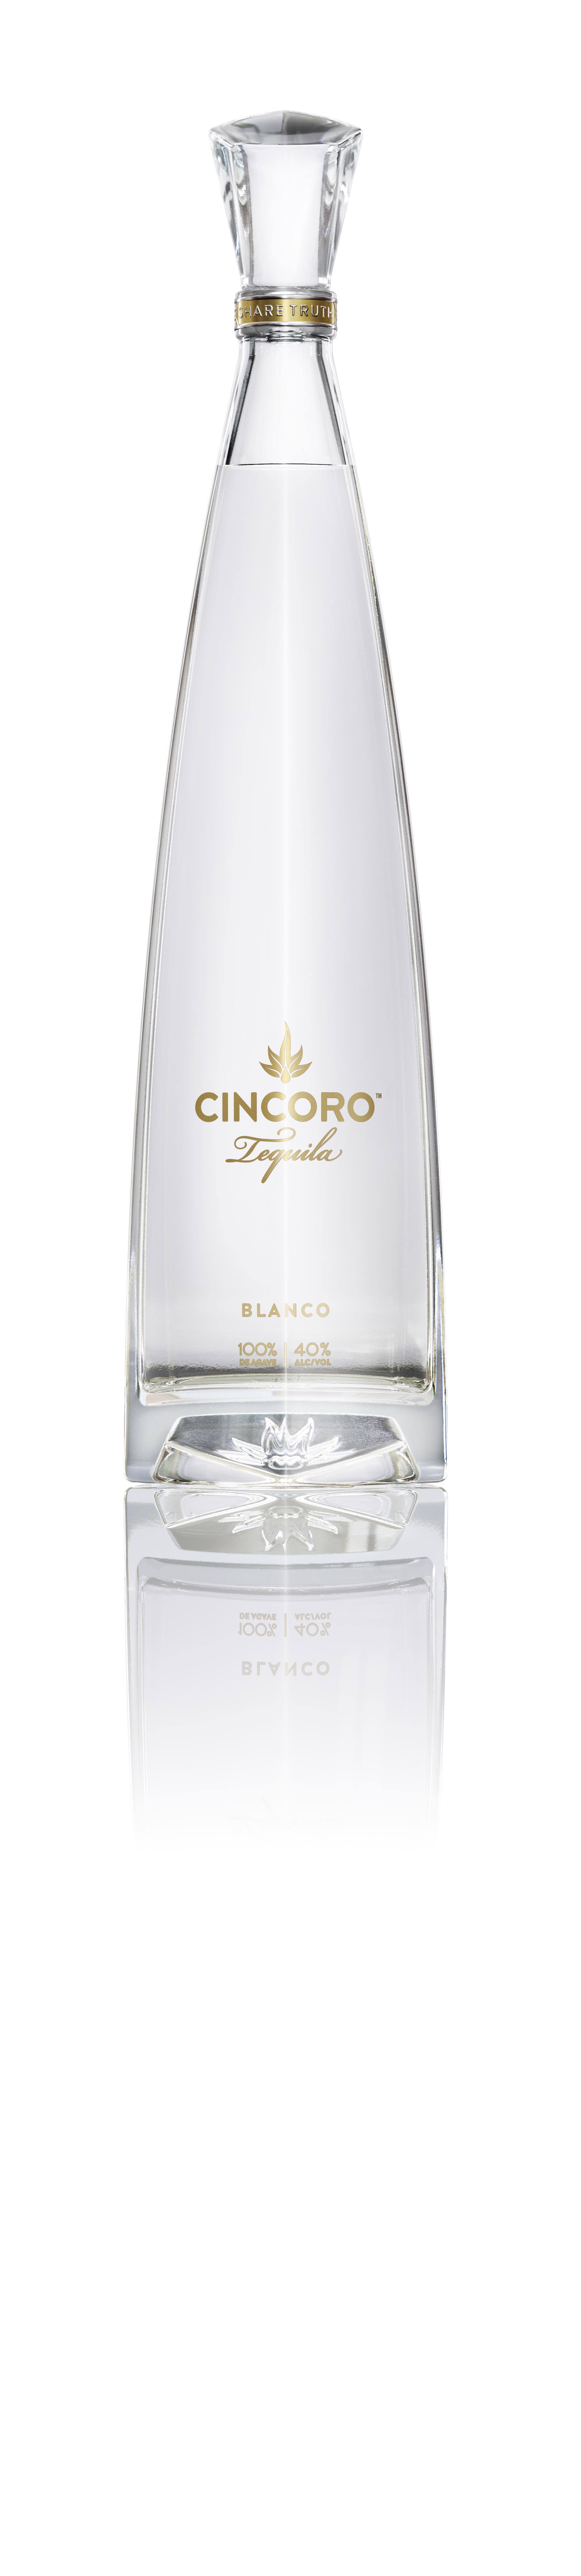 Cincoro Blanco Tequila - 750 ml